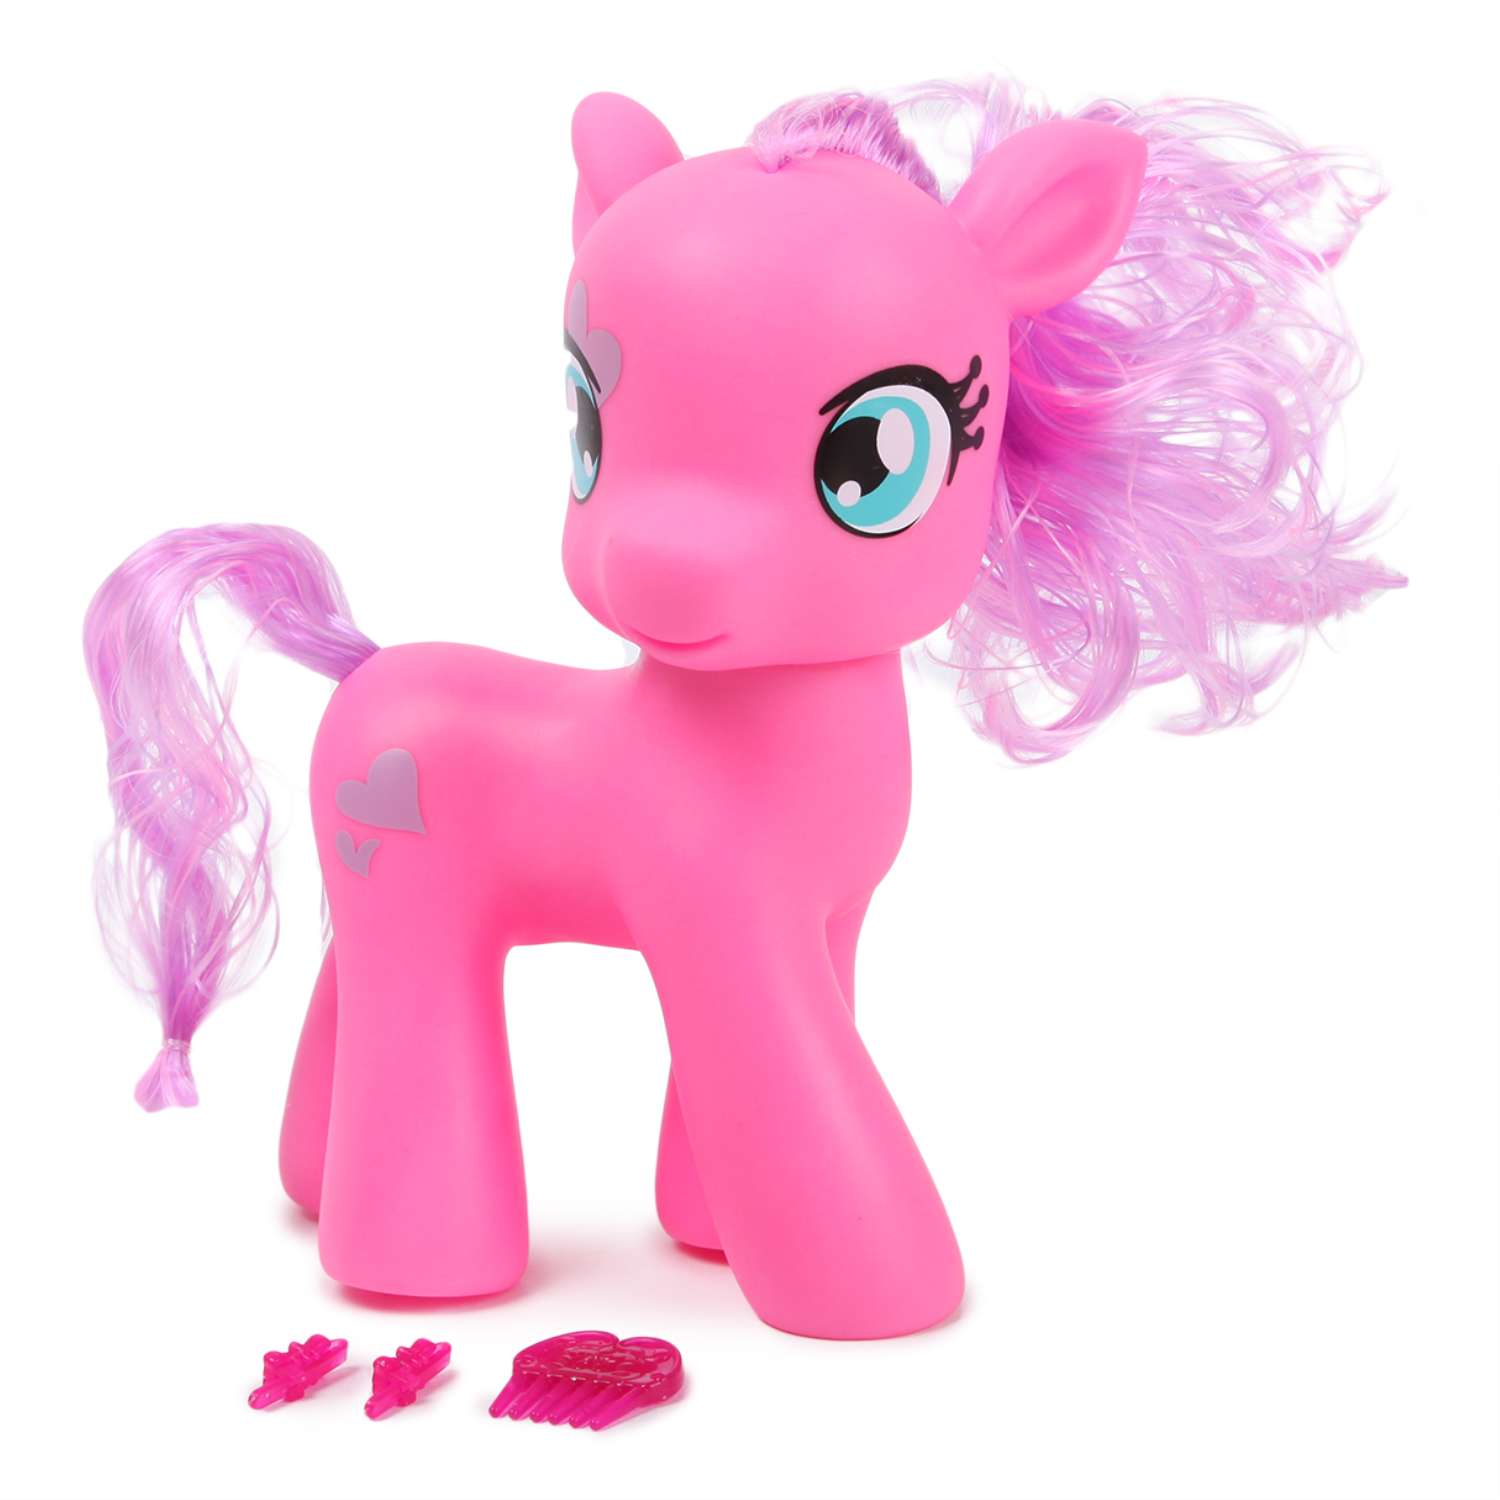 Star pony. Пони Demi Star. Набор пони Demi Star. Деми Стар лошадки пони. Розовый пони игрушка.